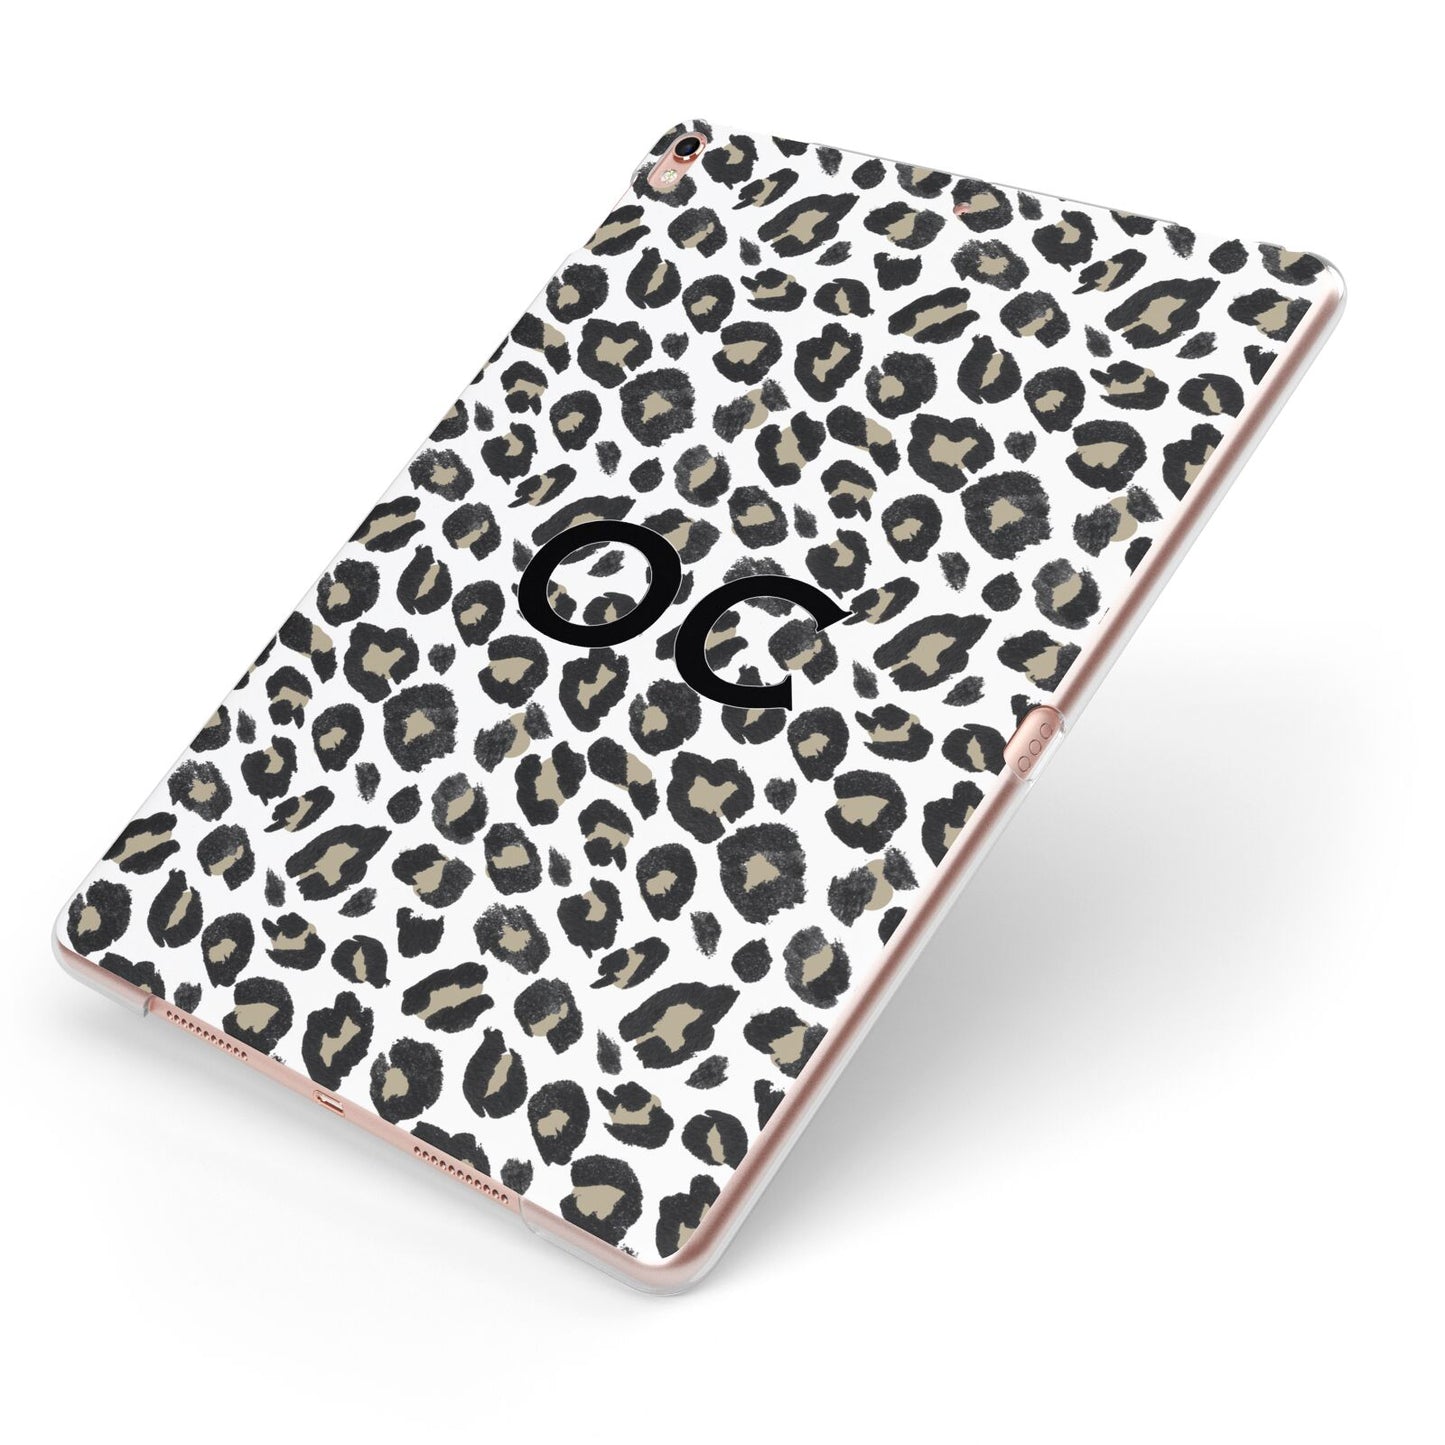 Tan Leopard Print Pattern Apple iPad Case on Rose Gold iPad Side View